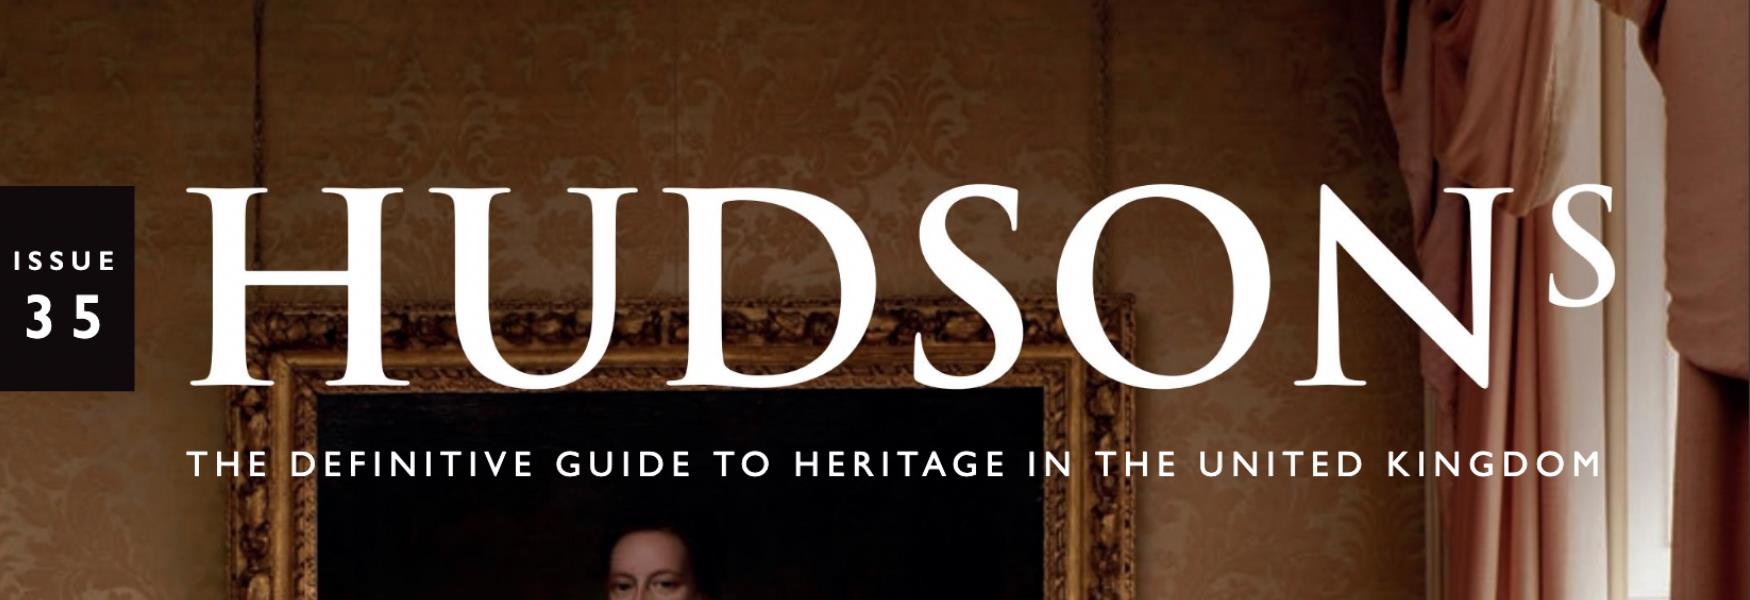 Hudsons Guide image